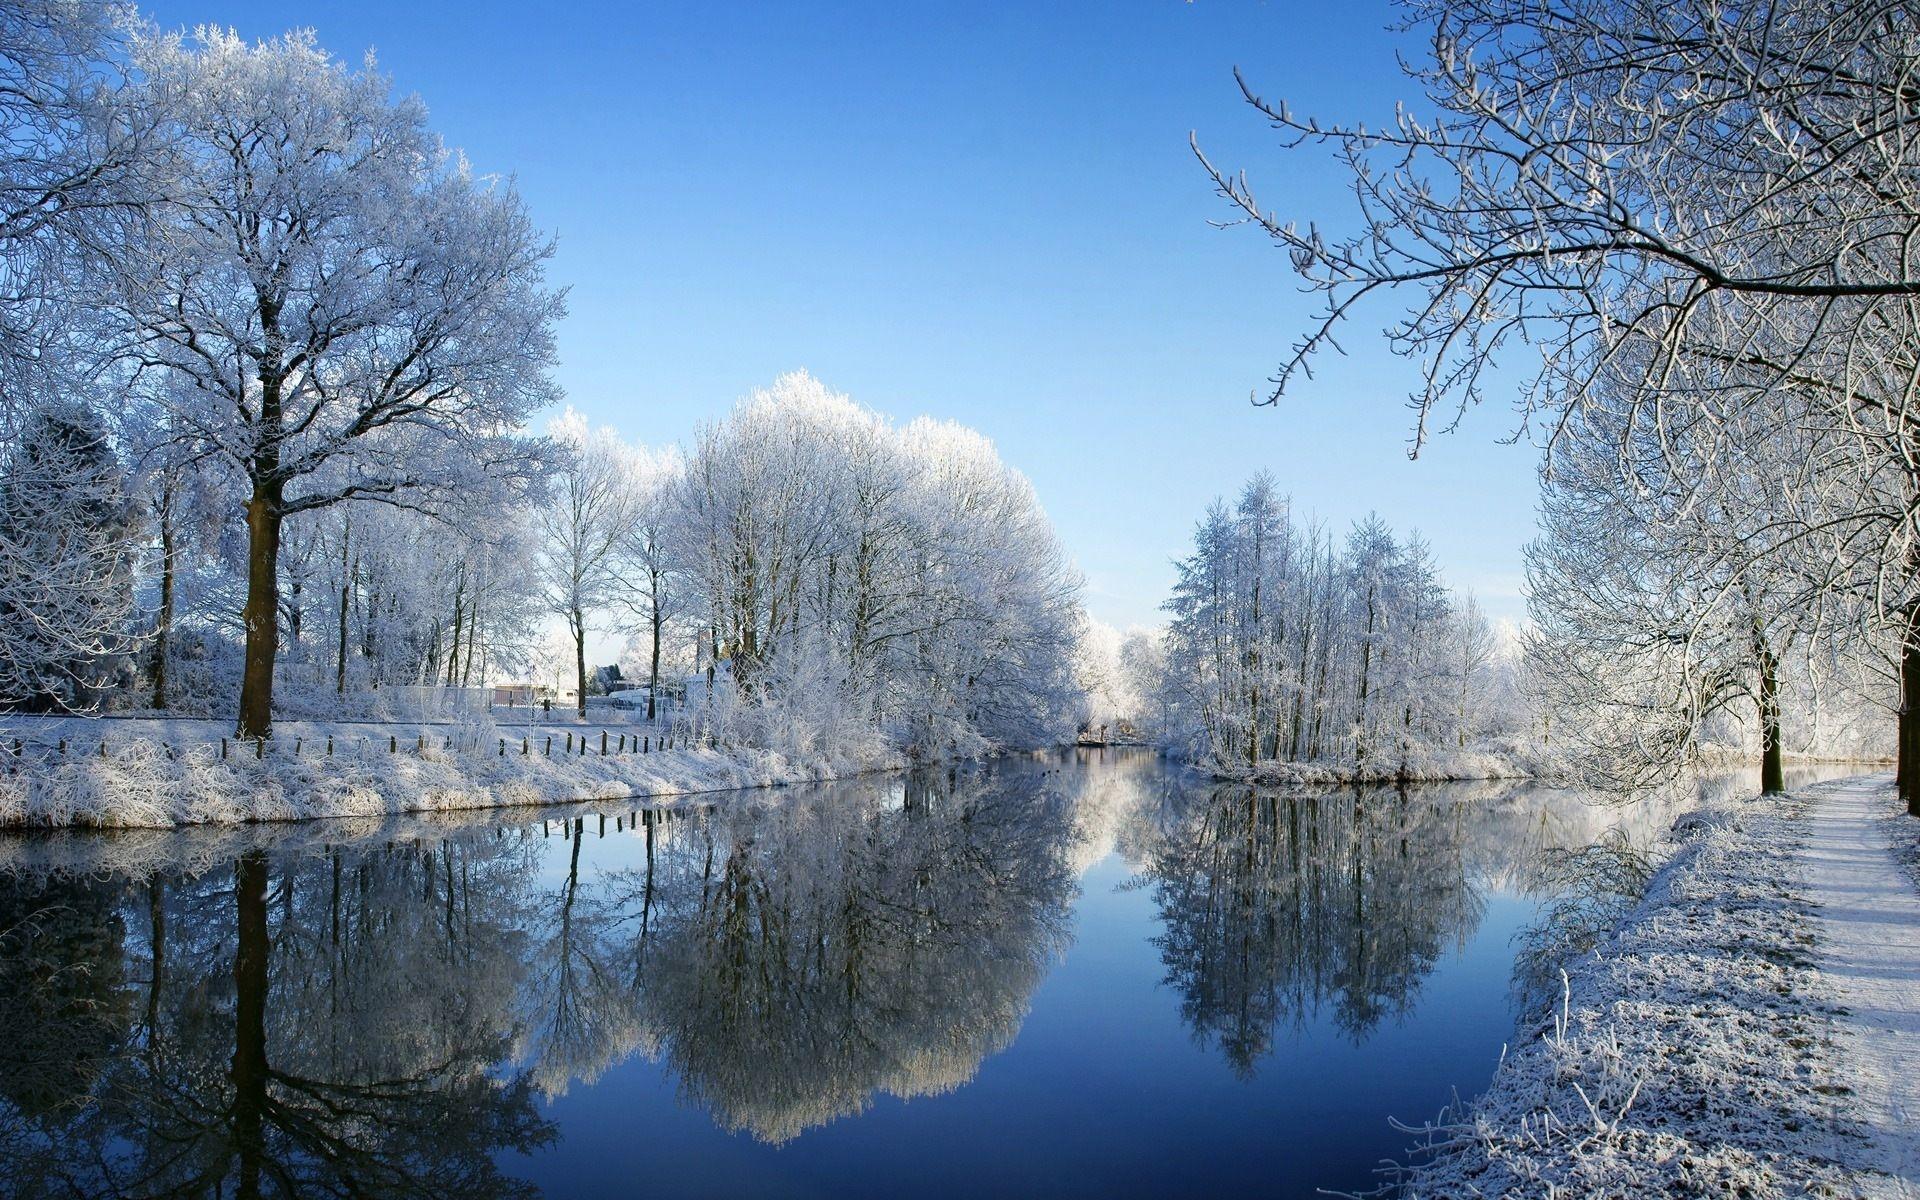 snow quietness. Winter scenery, Winter landscape, Winter picture